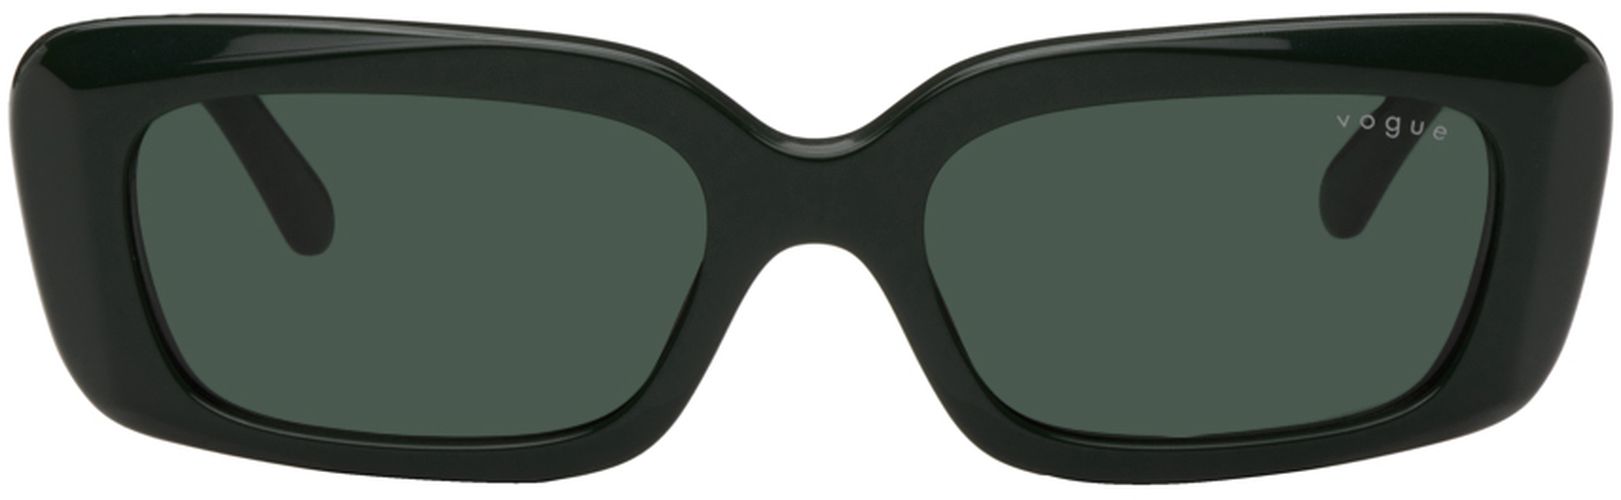 Lunettes de soleil vertes édition Hailey Bieber - Vogue Eyewear - Modalova